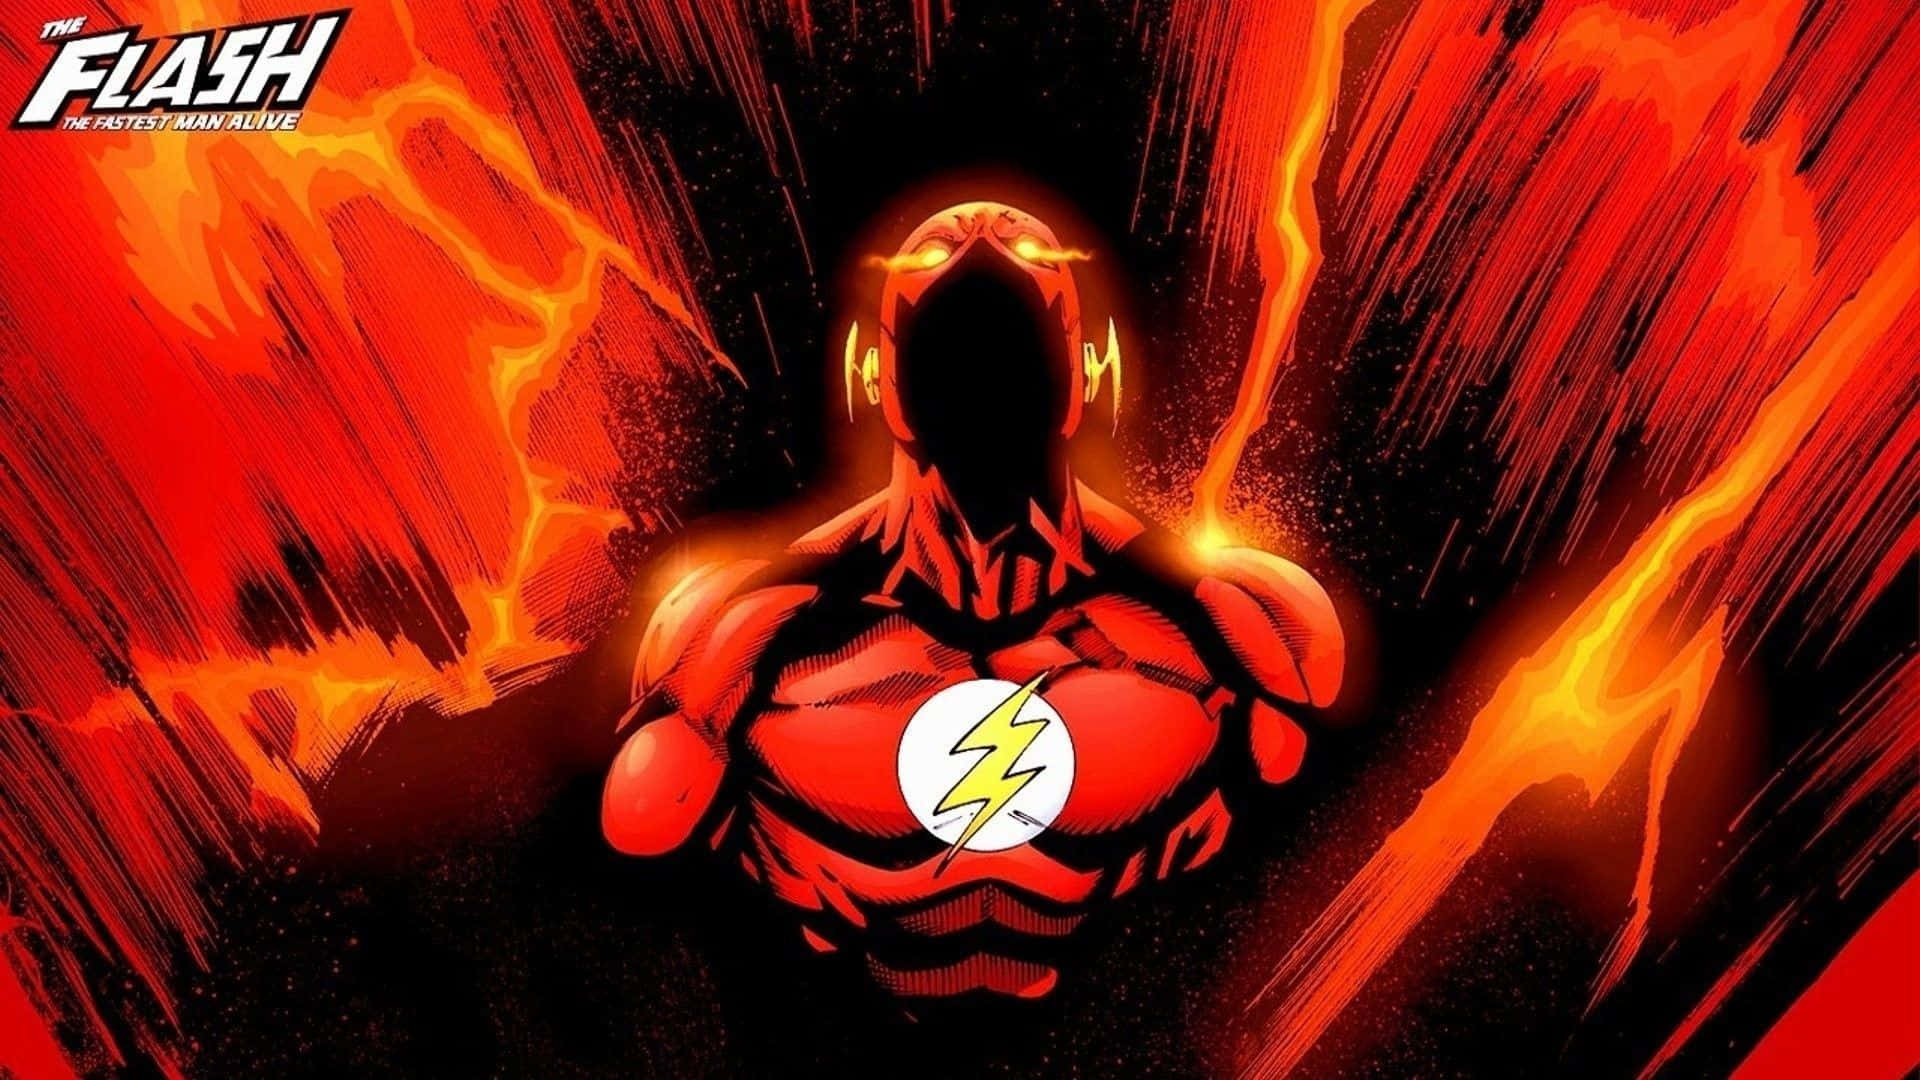 Cool Flash The Fastest Man Alive Comic Wallpaper